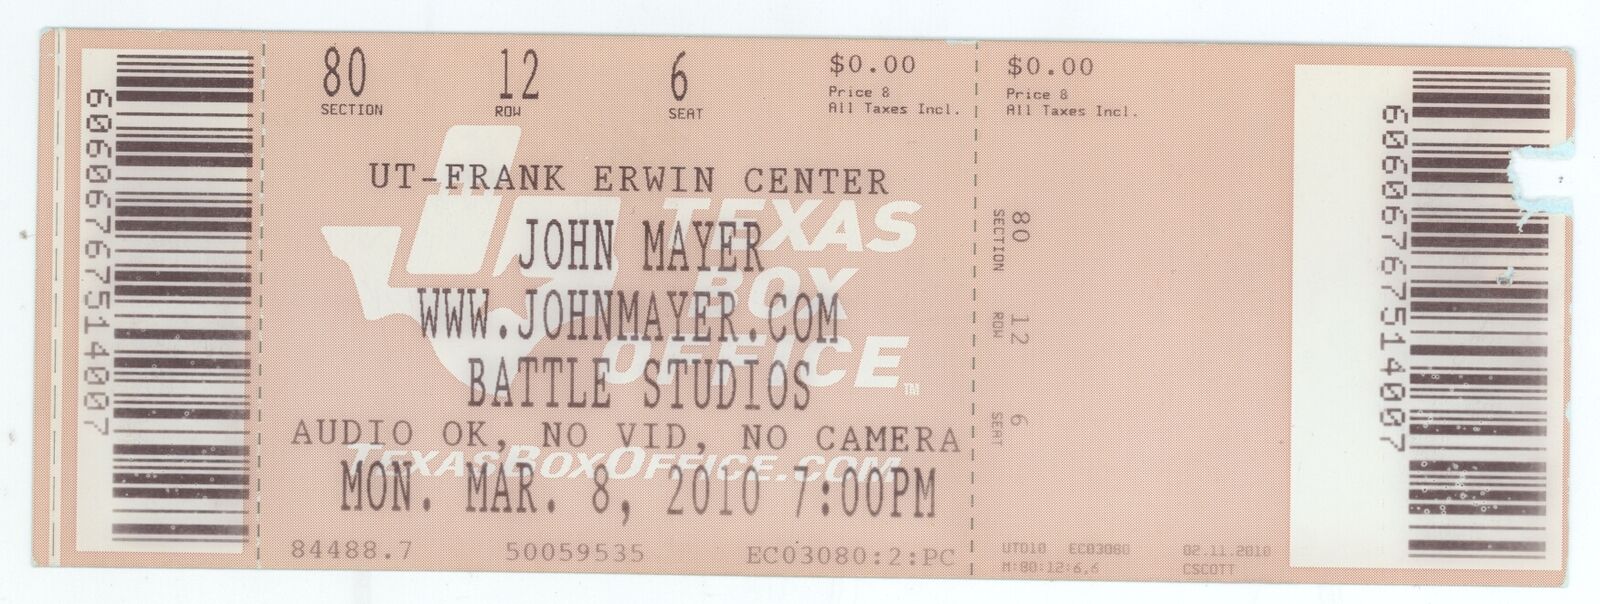 Rare John Mayer 3/8/10 Austin Tx Ut Frank Erwin Center Concert Ticket!